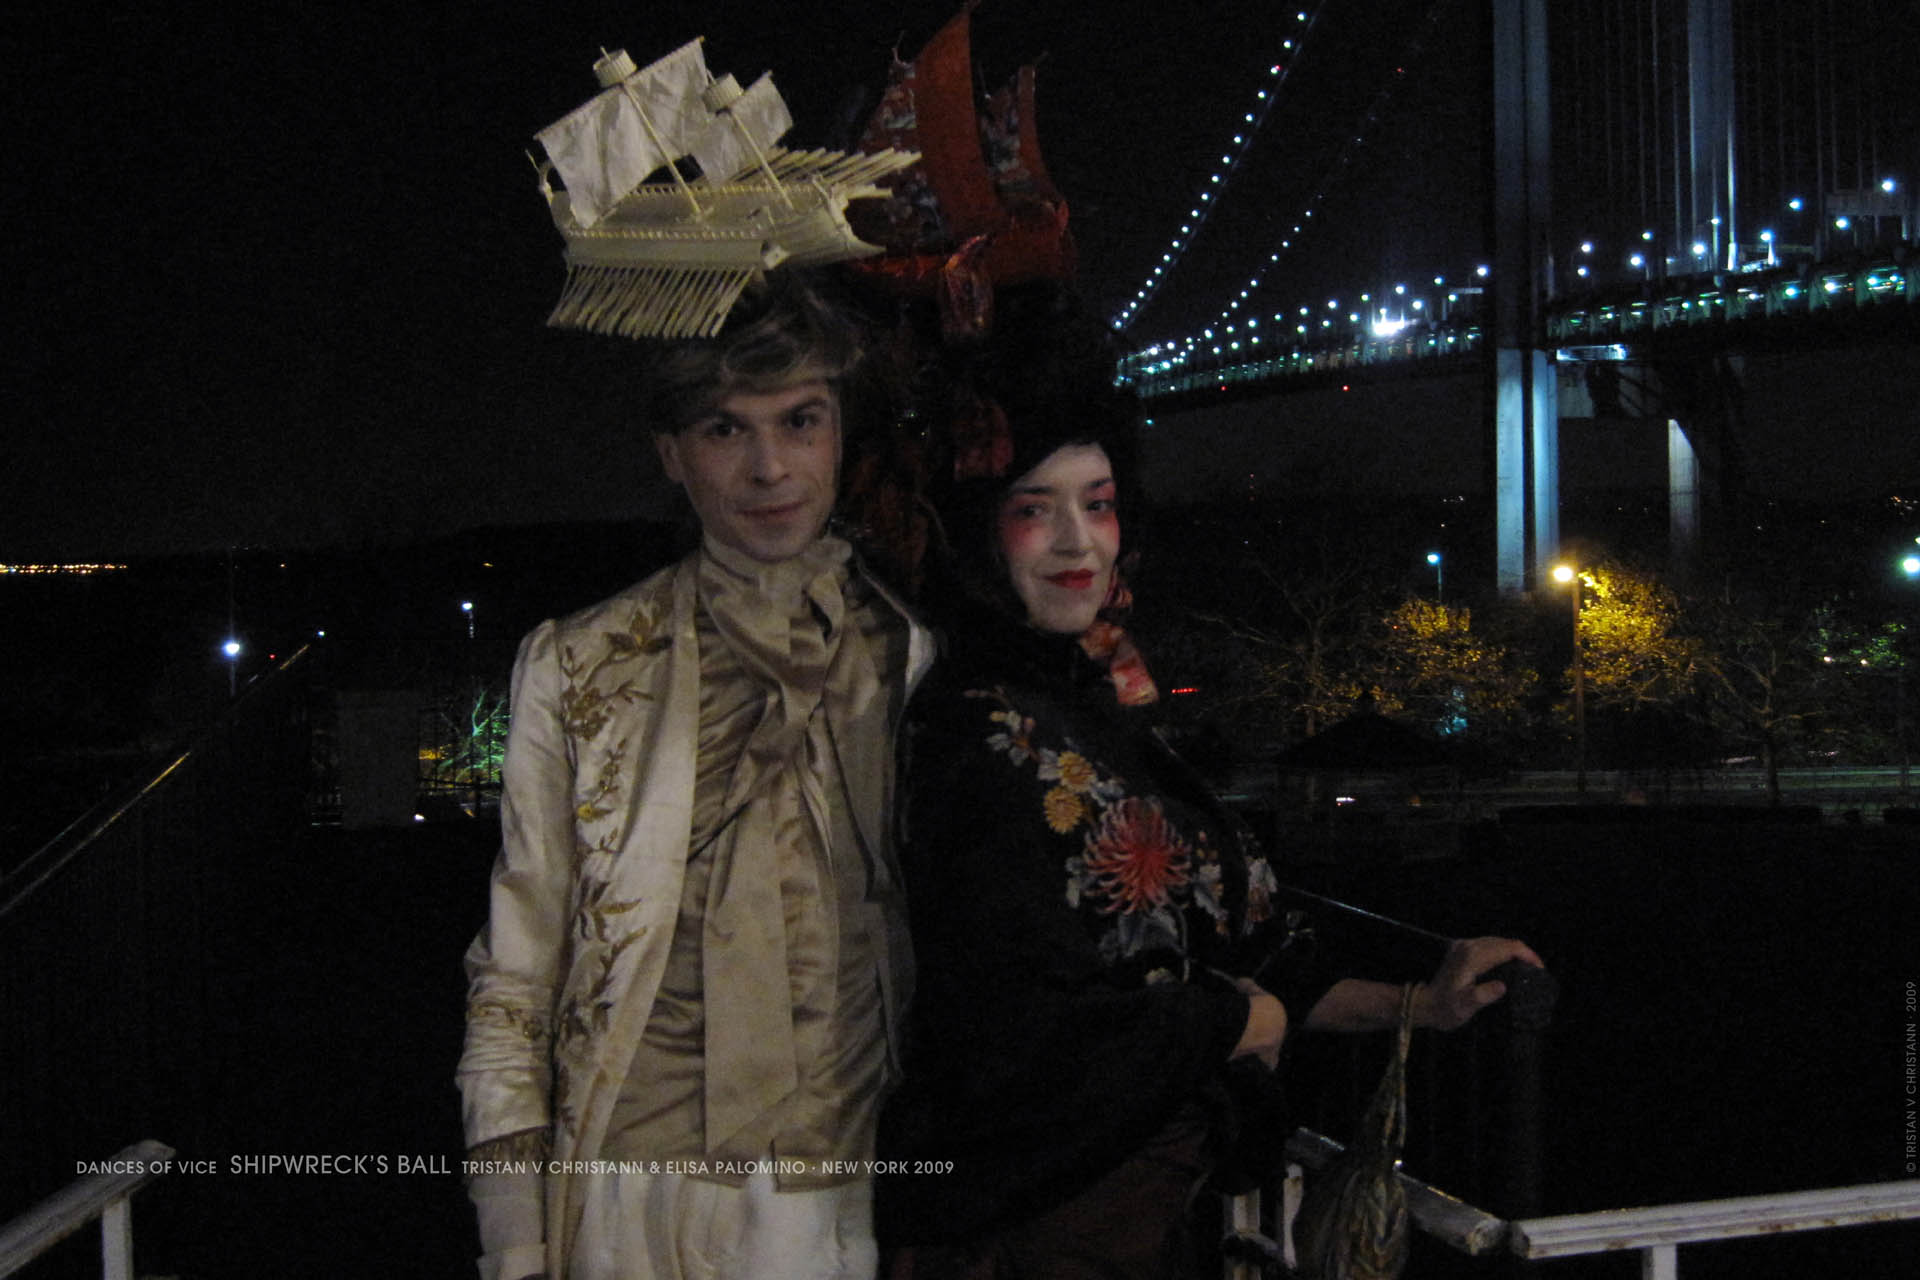 Tristan V Christann with Elisa Palomino, The Dances of Vice Shipwrecks Ball, NY 2009 _1